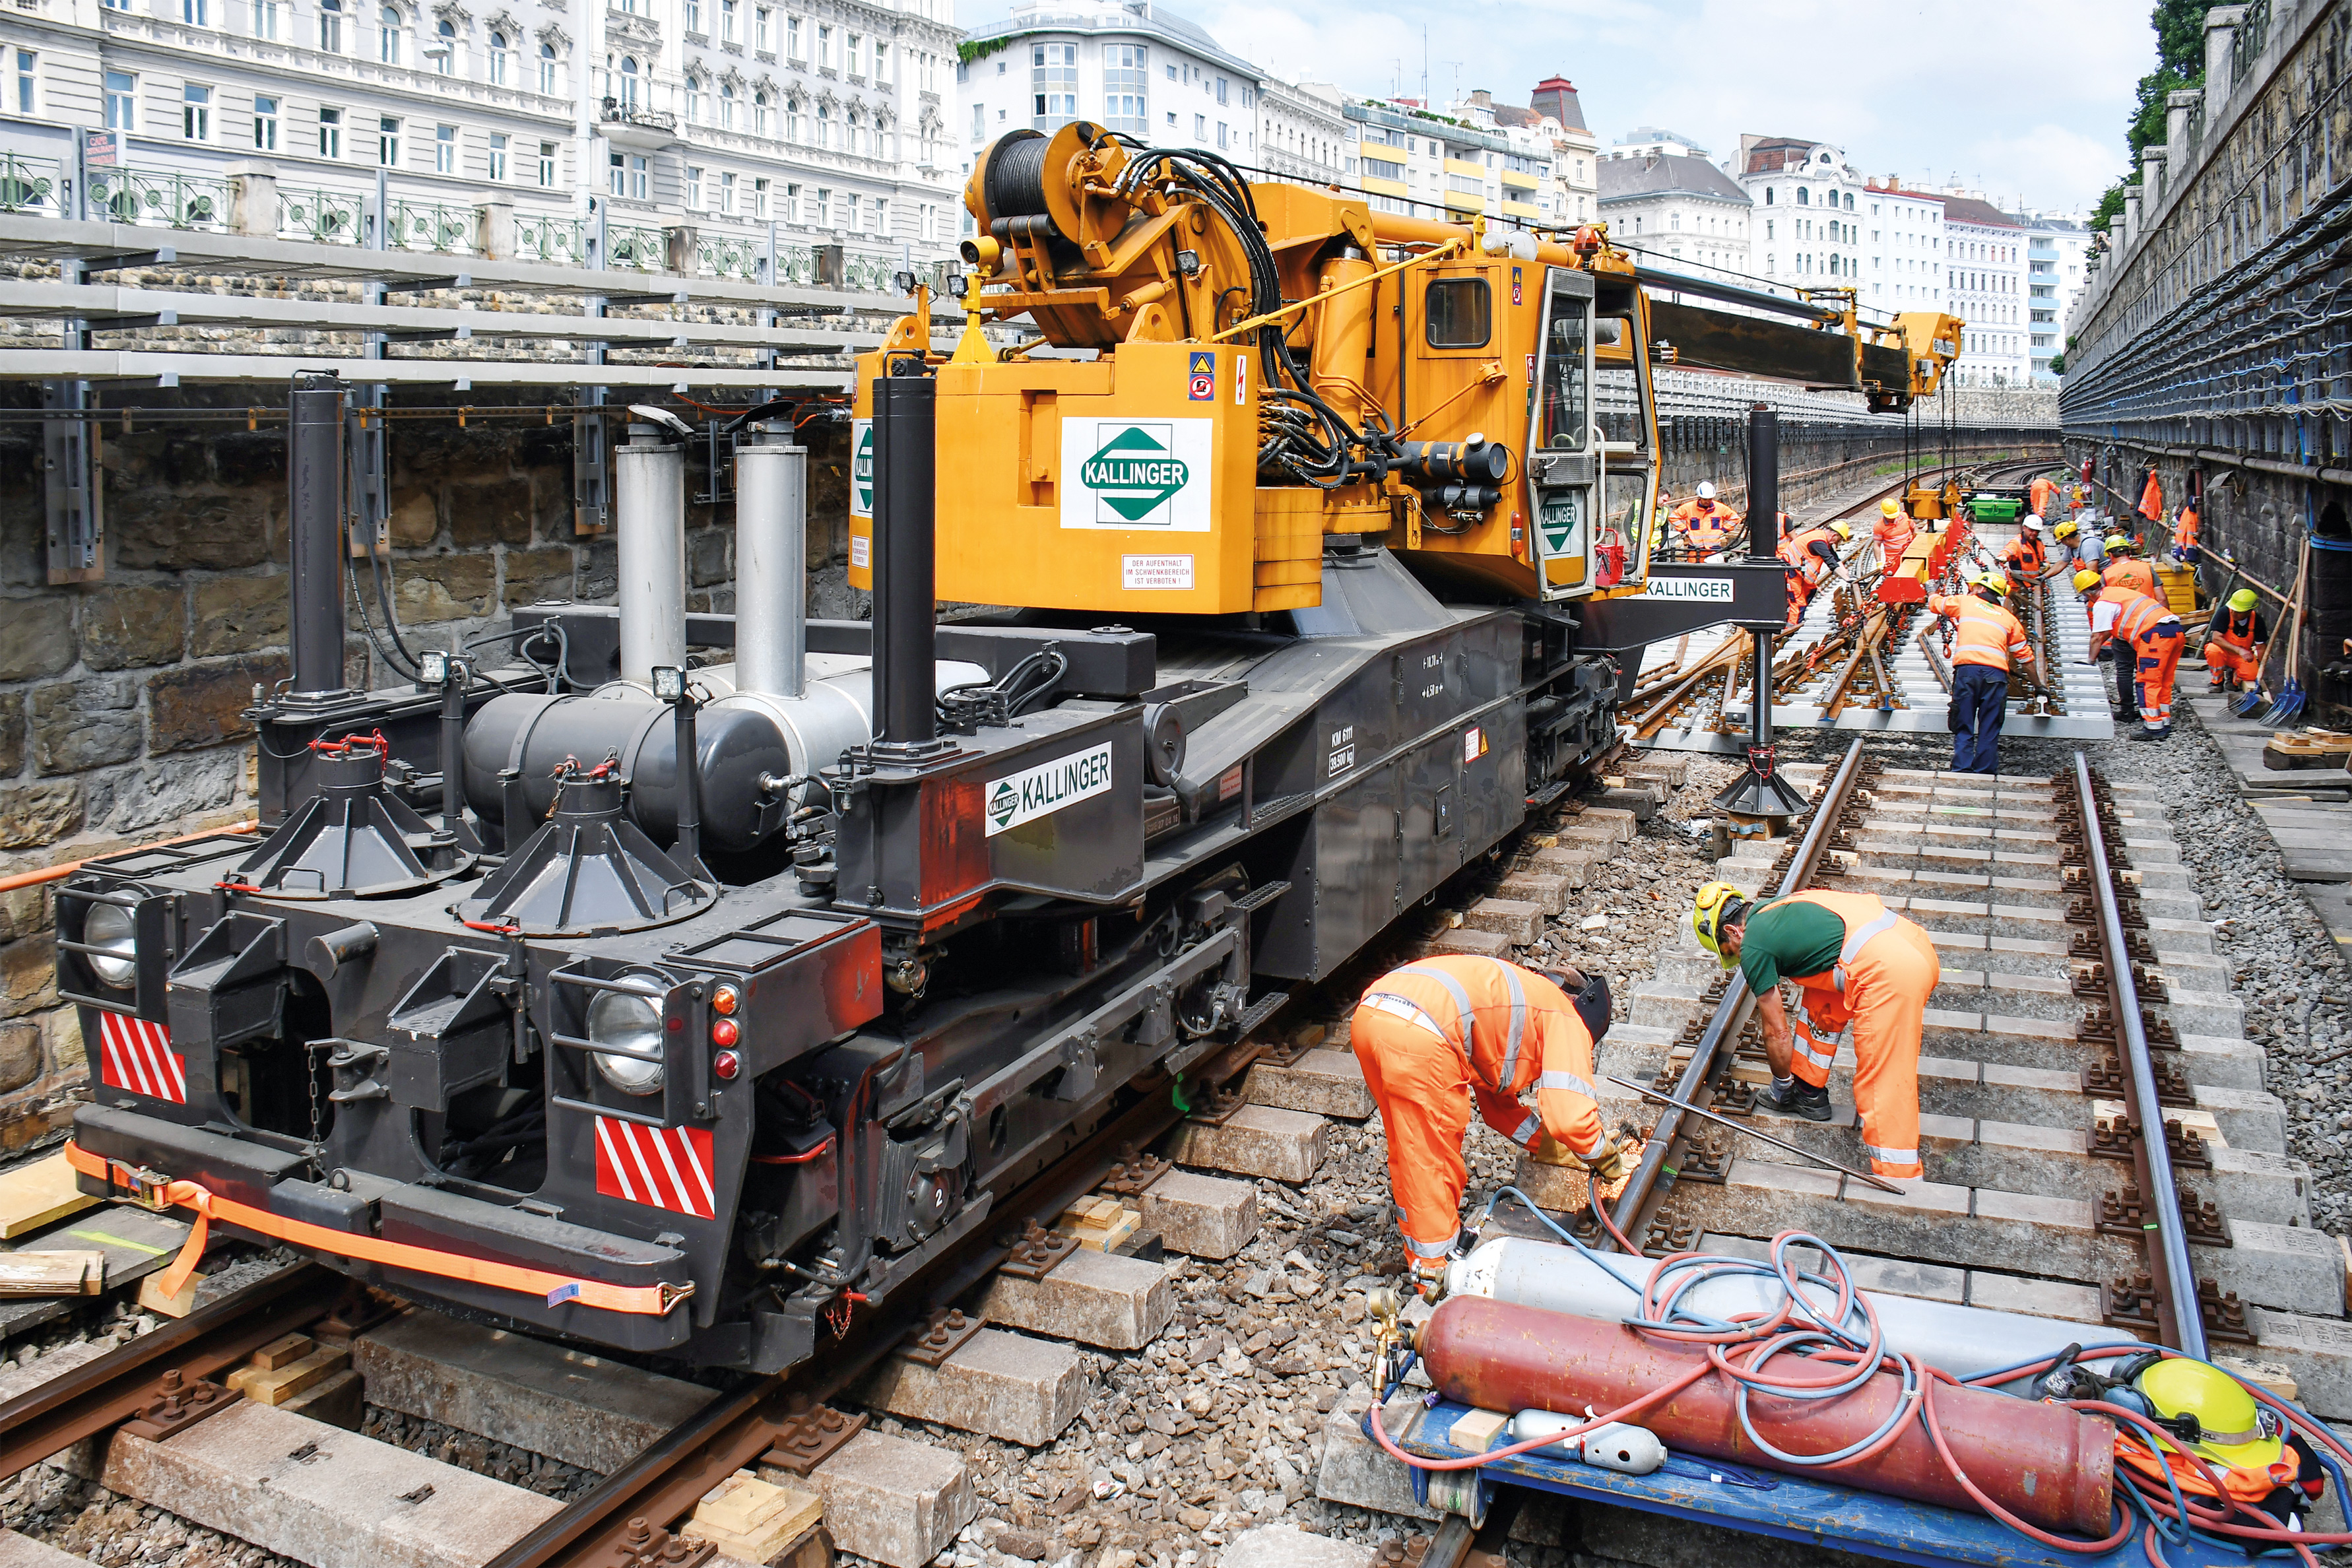 Gleisarbeiten, Wien - Railway construction